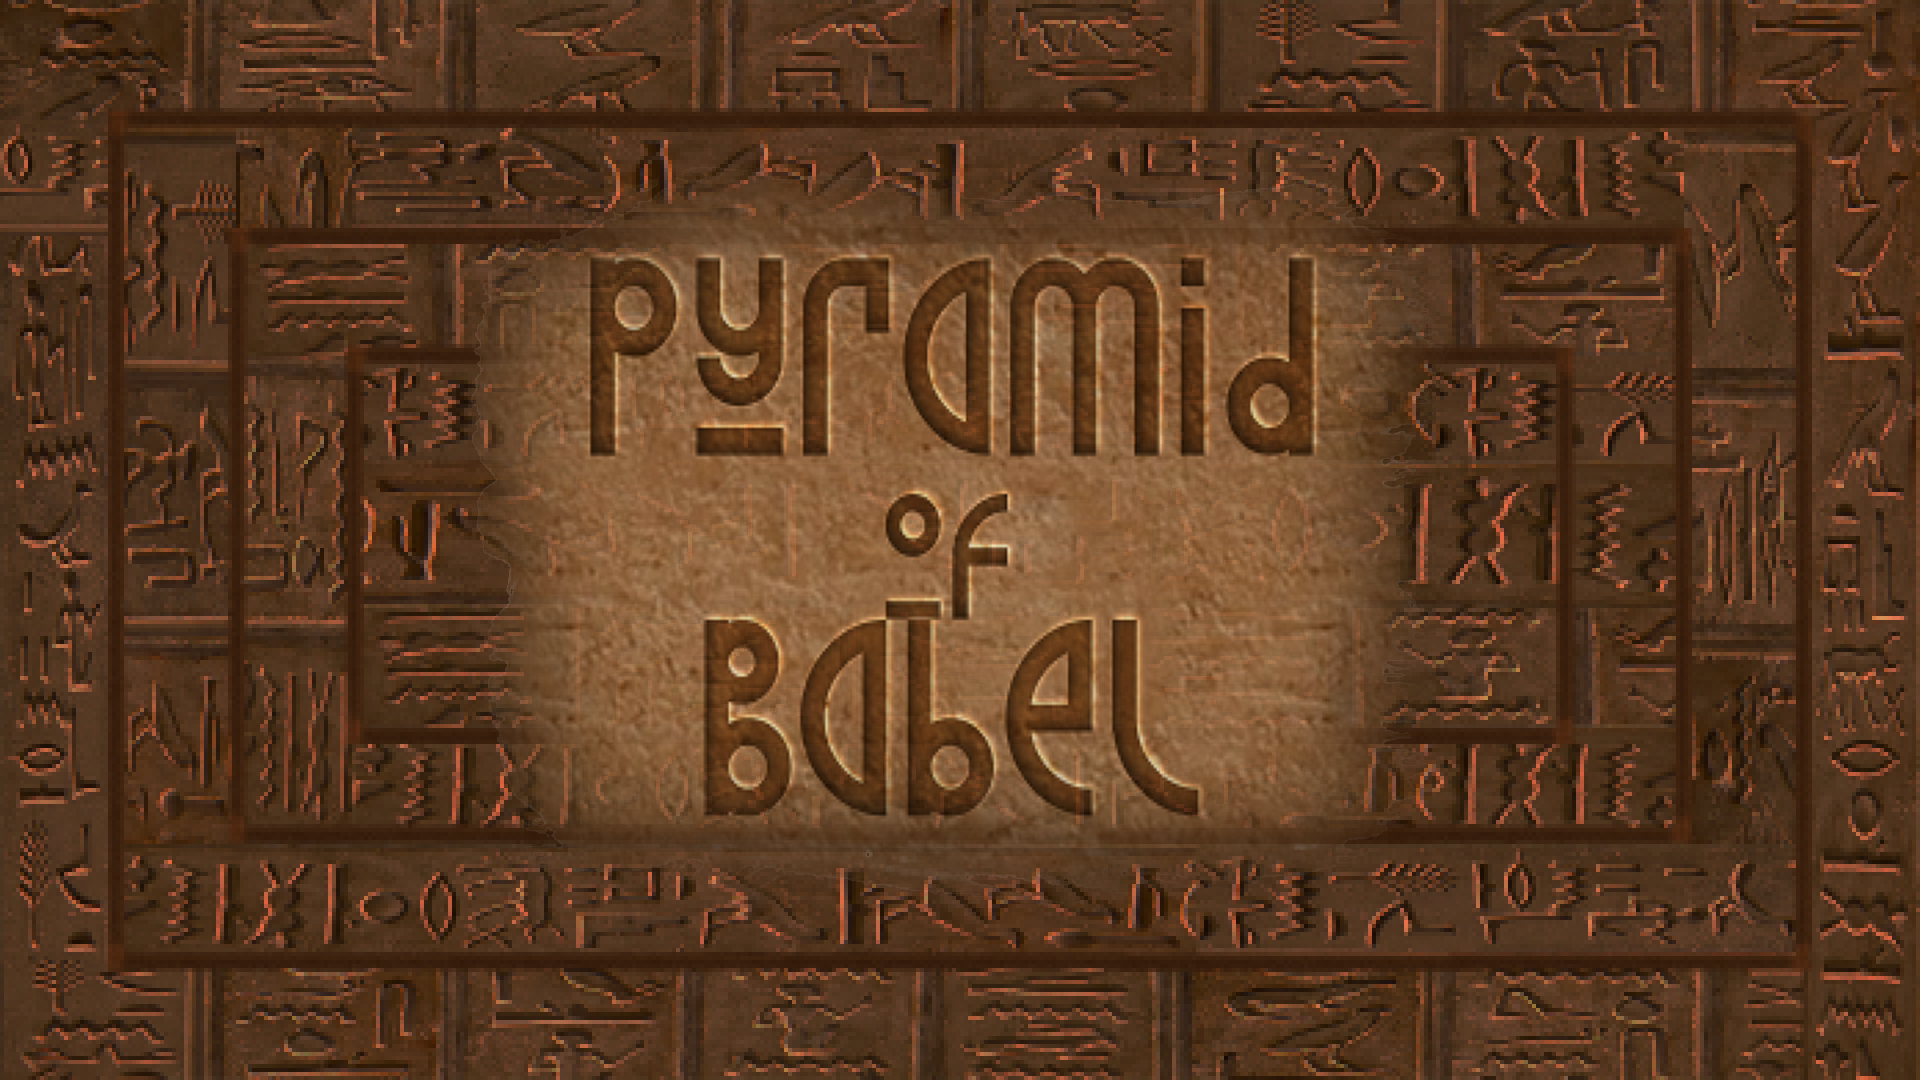 Pyramid of Babel